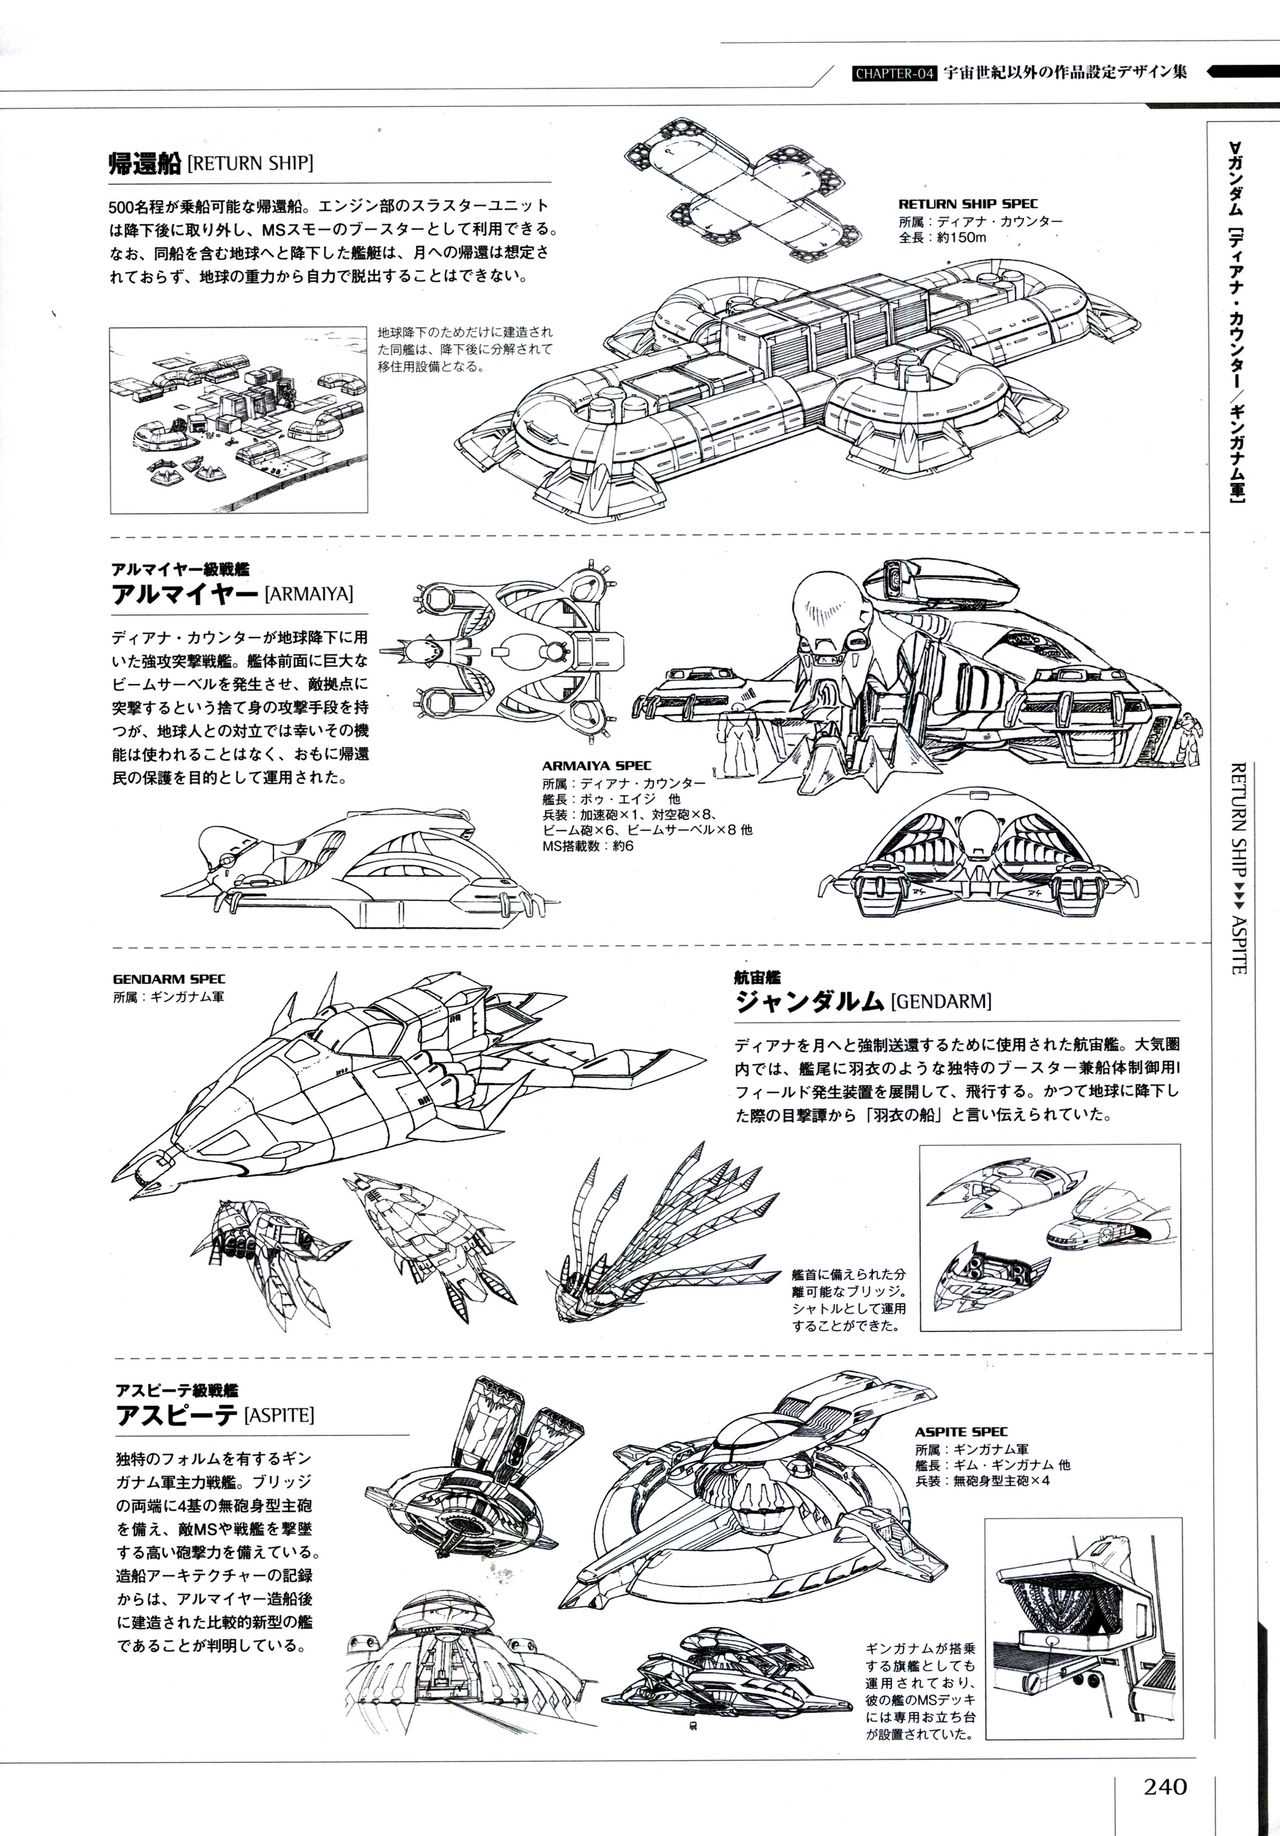 Mobile Suit Gundam - Ship & Aerospace Plane Encyclopedia - Revised Edition 245